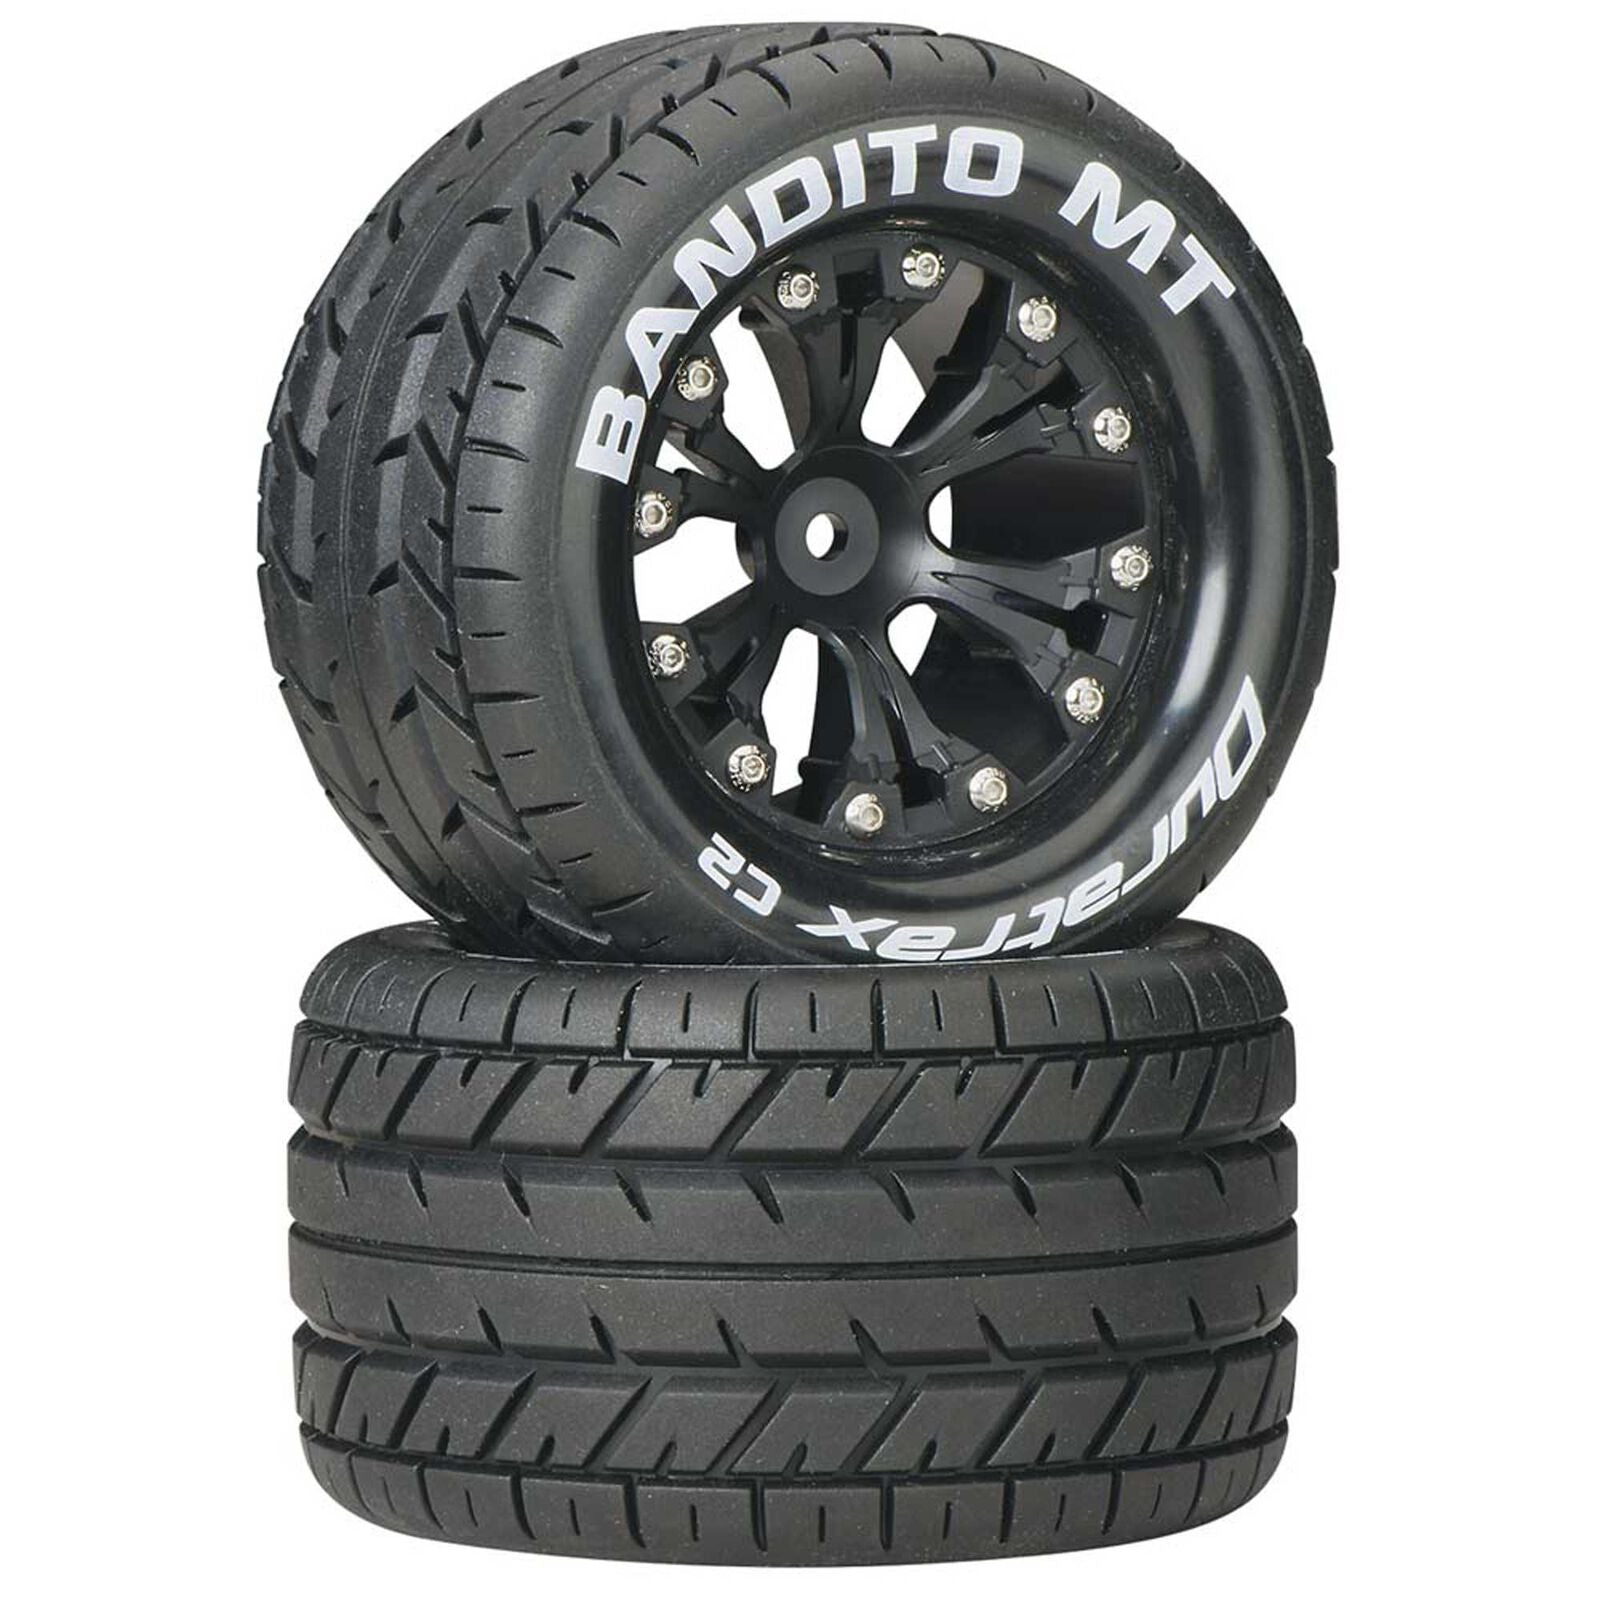 DURATRAX DTXC3502 Bandito MT 2.8" 2WD Mounted Rear C2 Tires, Black